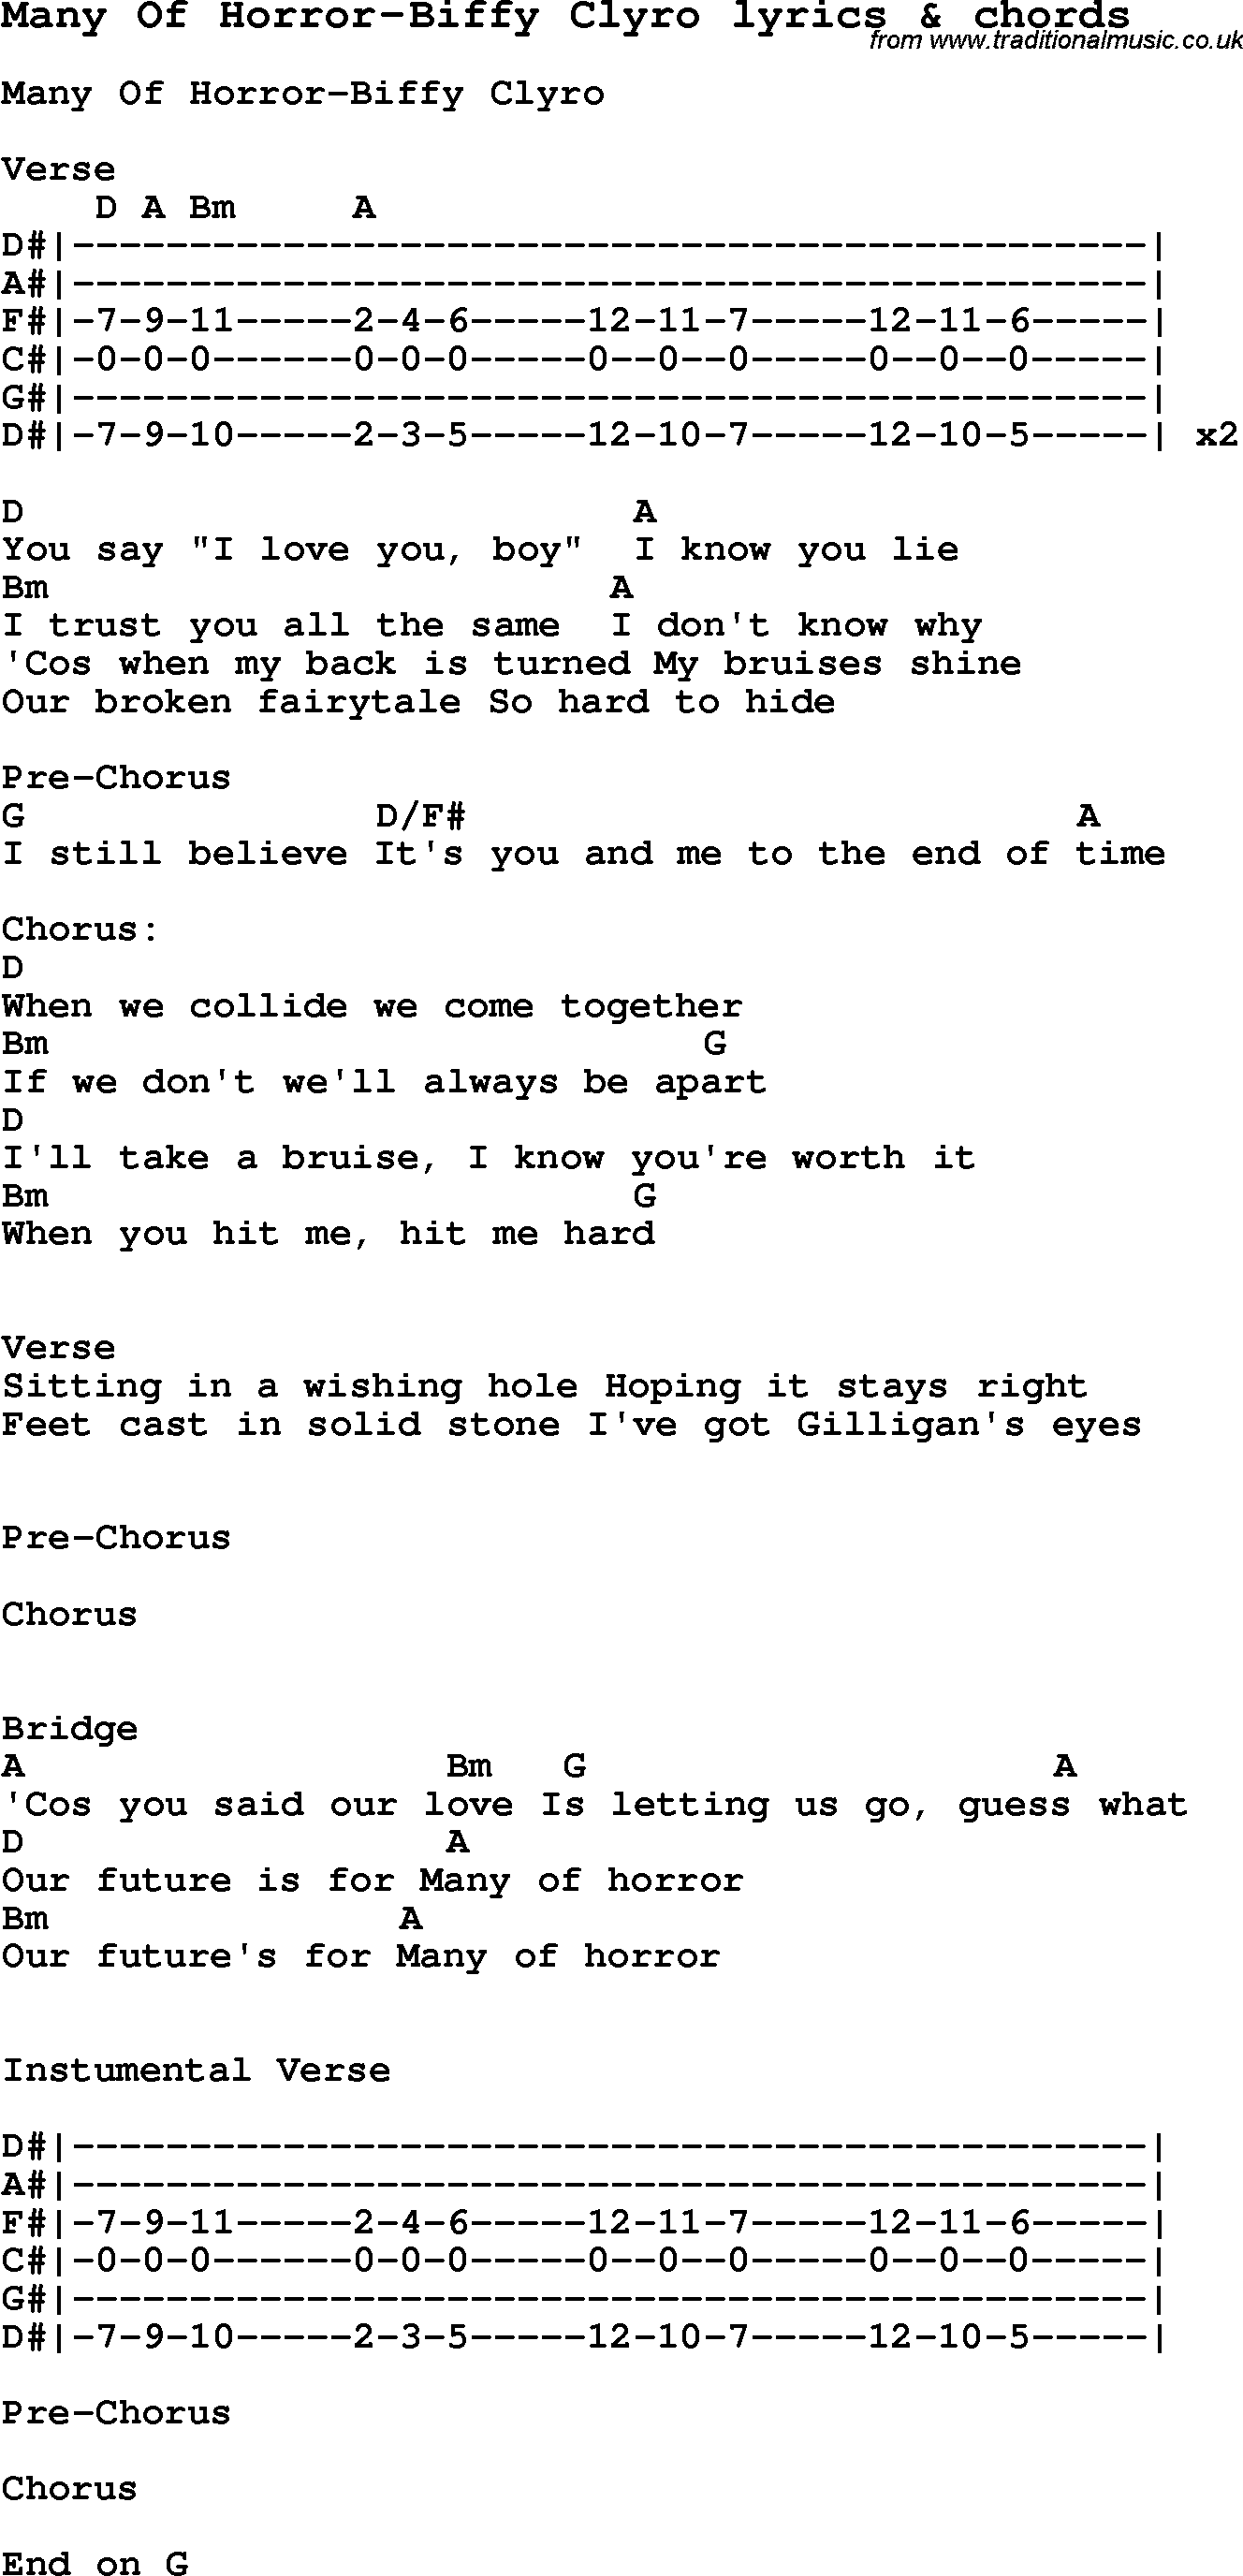 Love Song Lyrics for: Many Of Horror-Biffy Clyro with chords for Ukulele, Guitar Banjo etc.